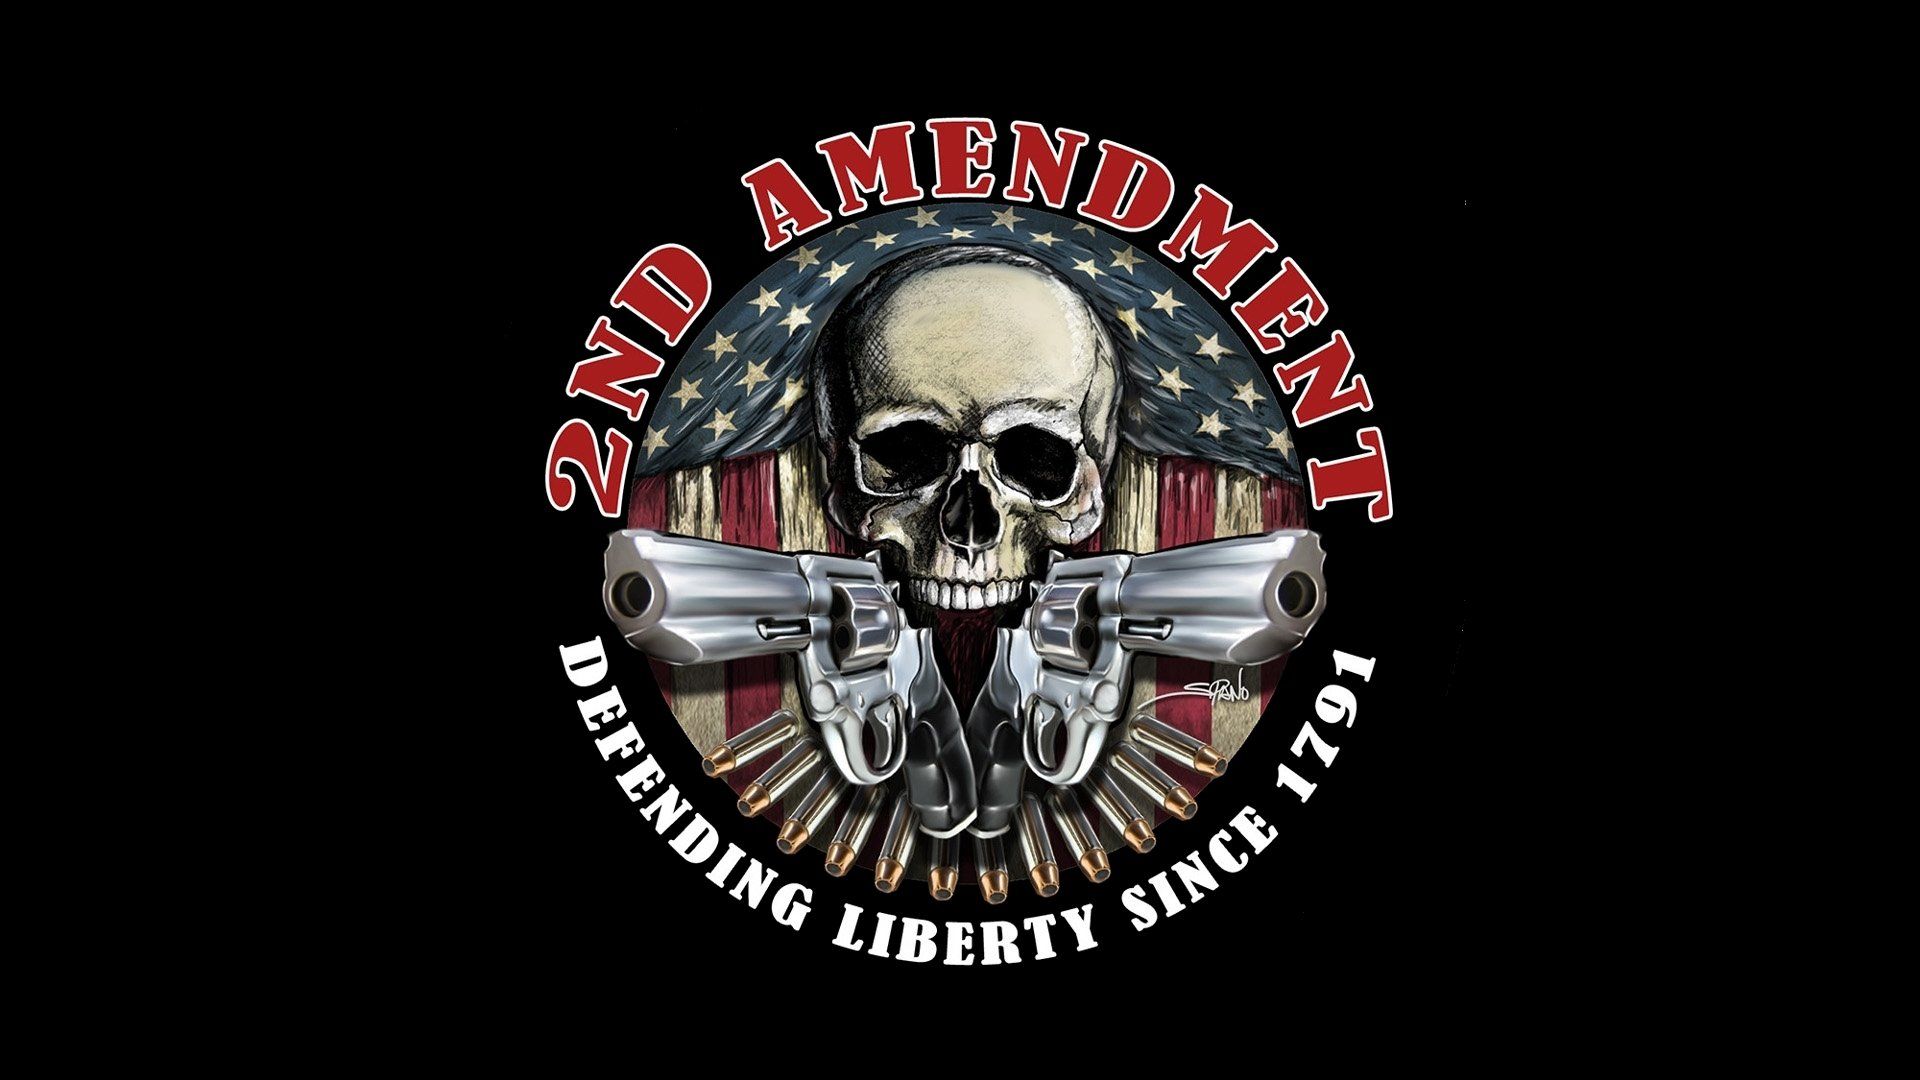 2Nd Amendment Defending Liberty Since 1791 HD Wallpaper